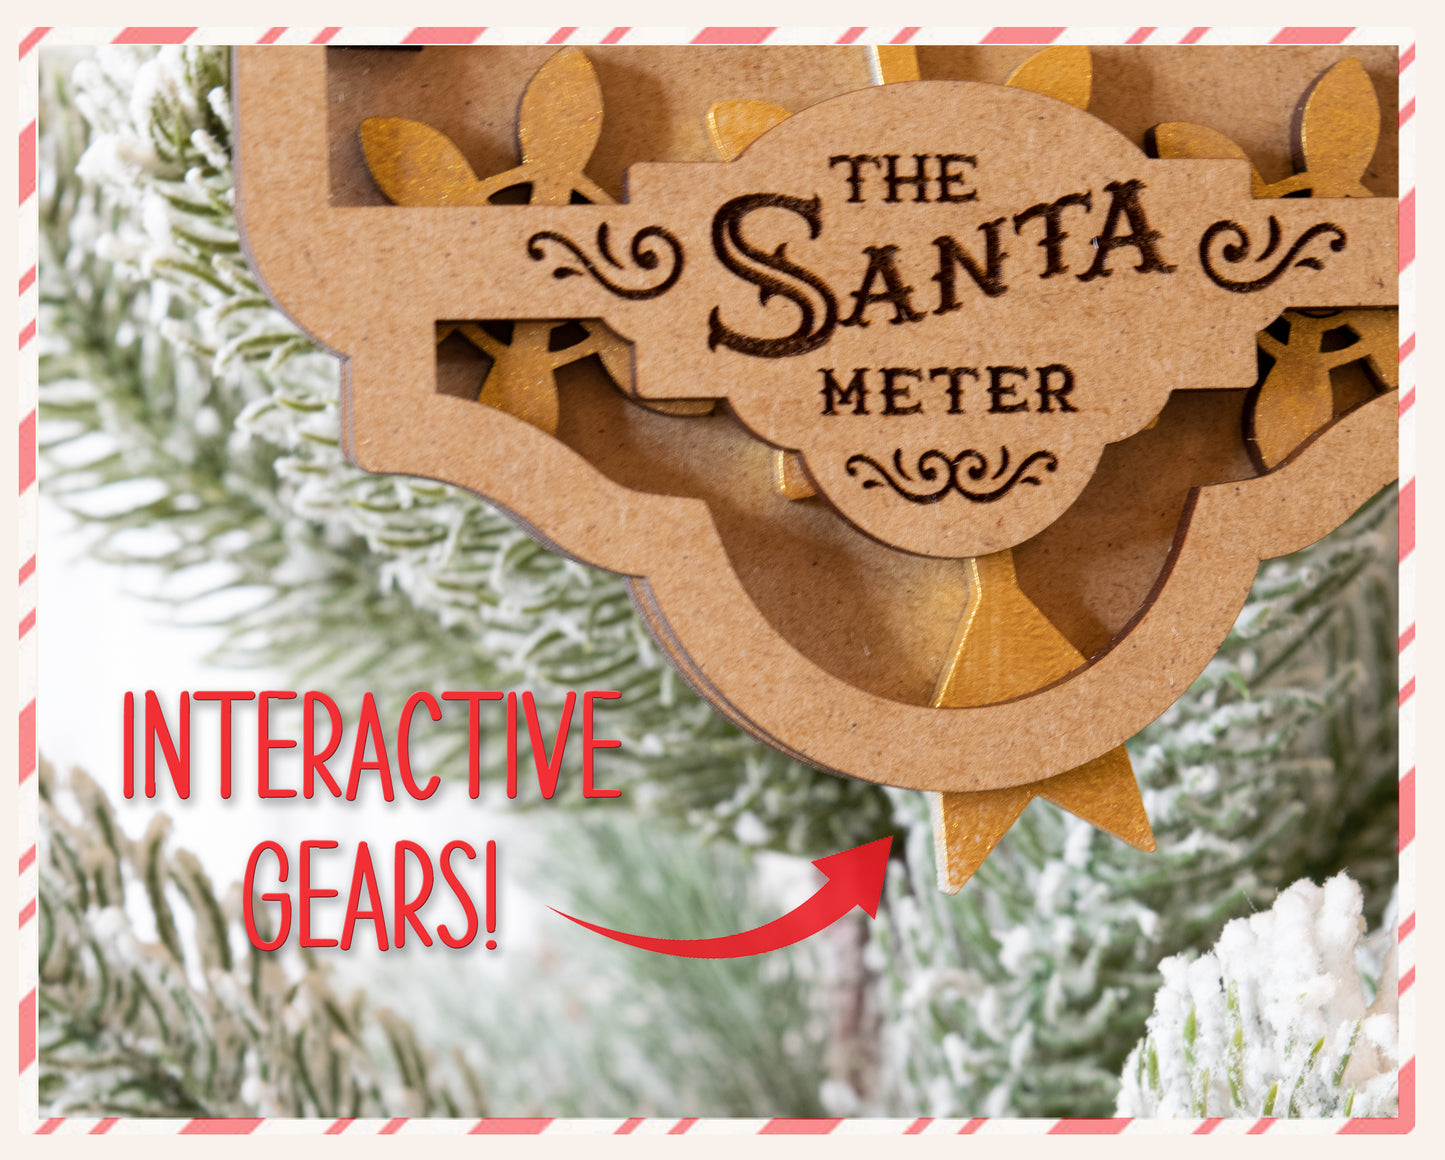 Naughty or Nice Santa-O-Meter Ornament